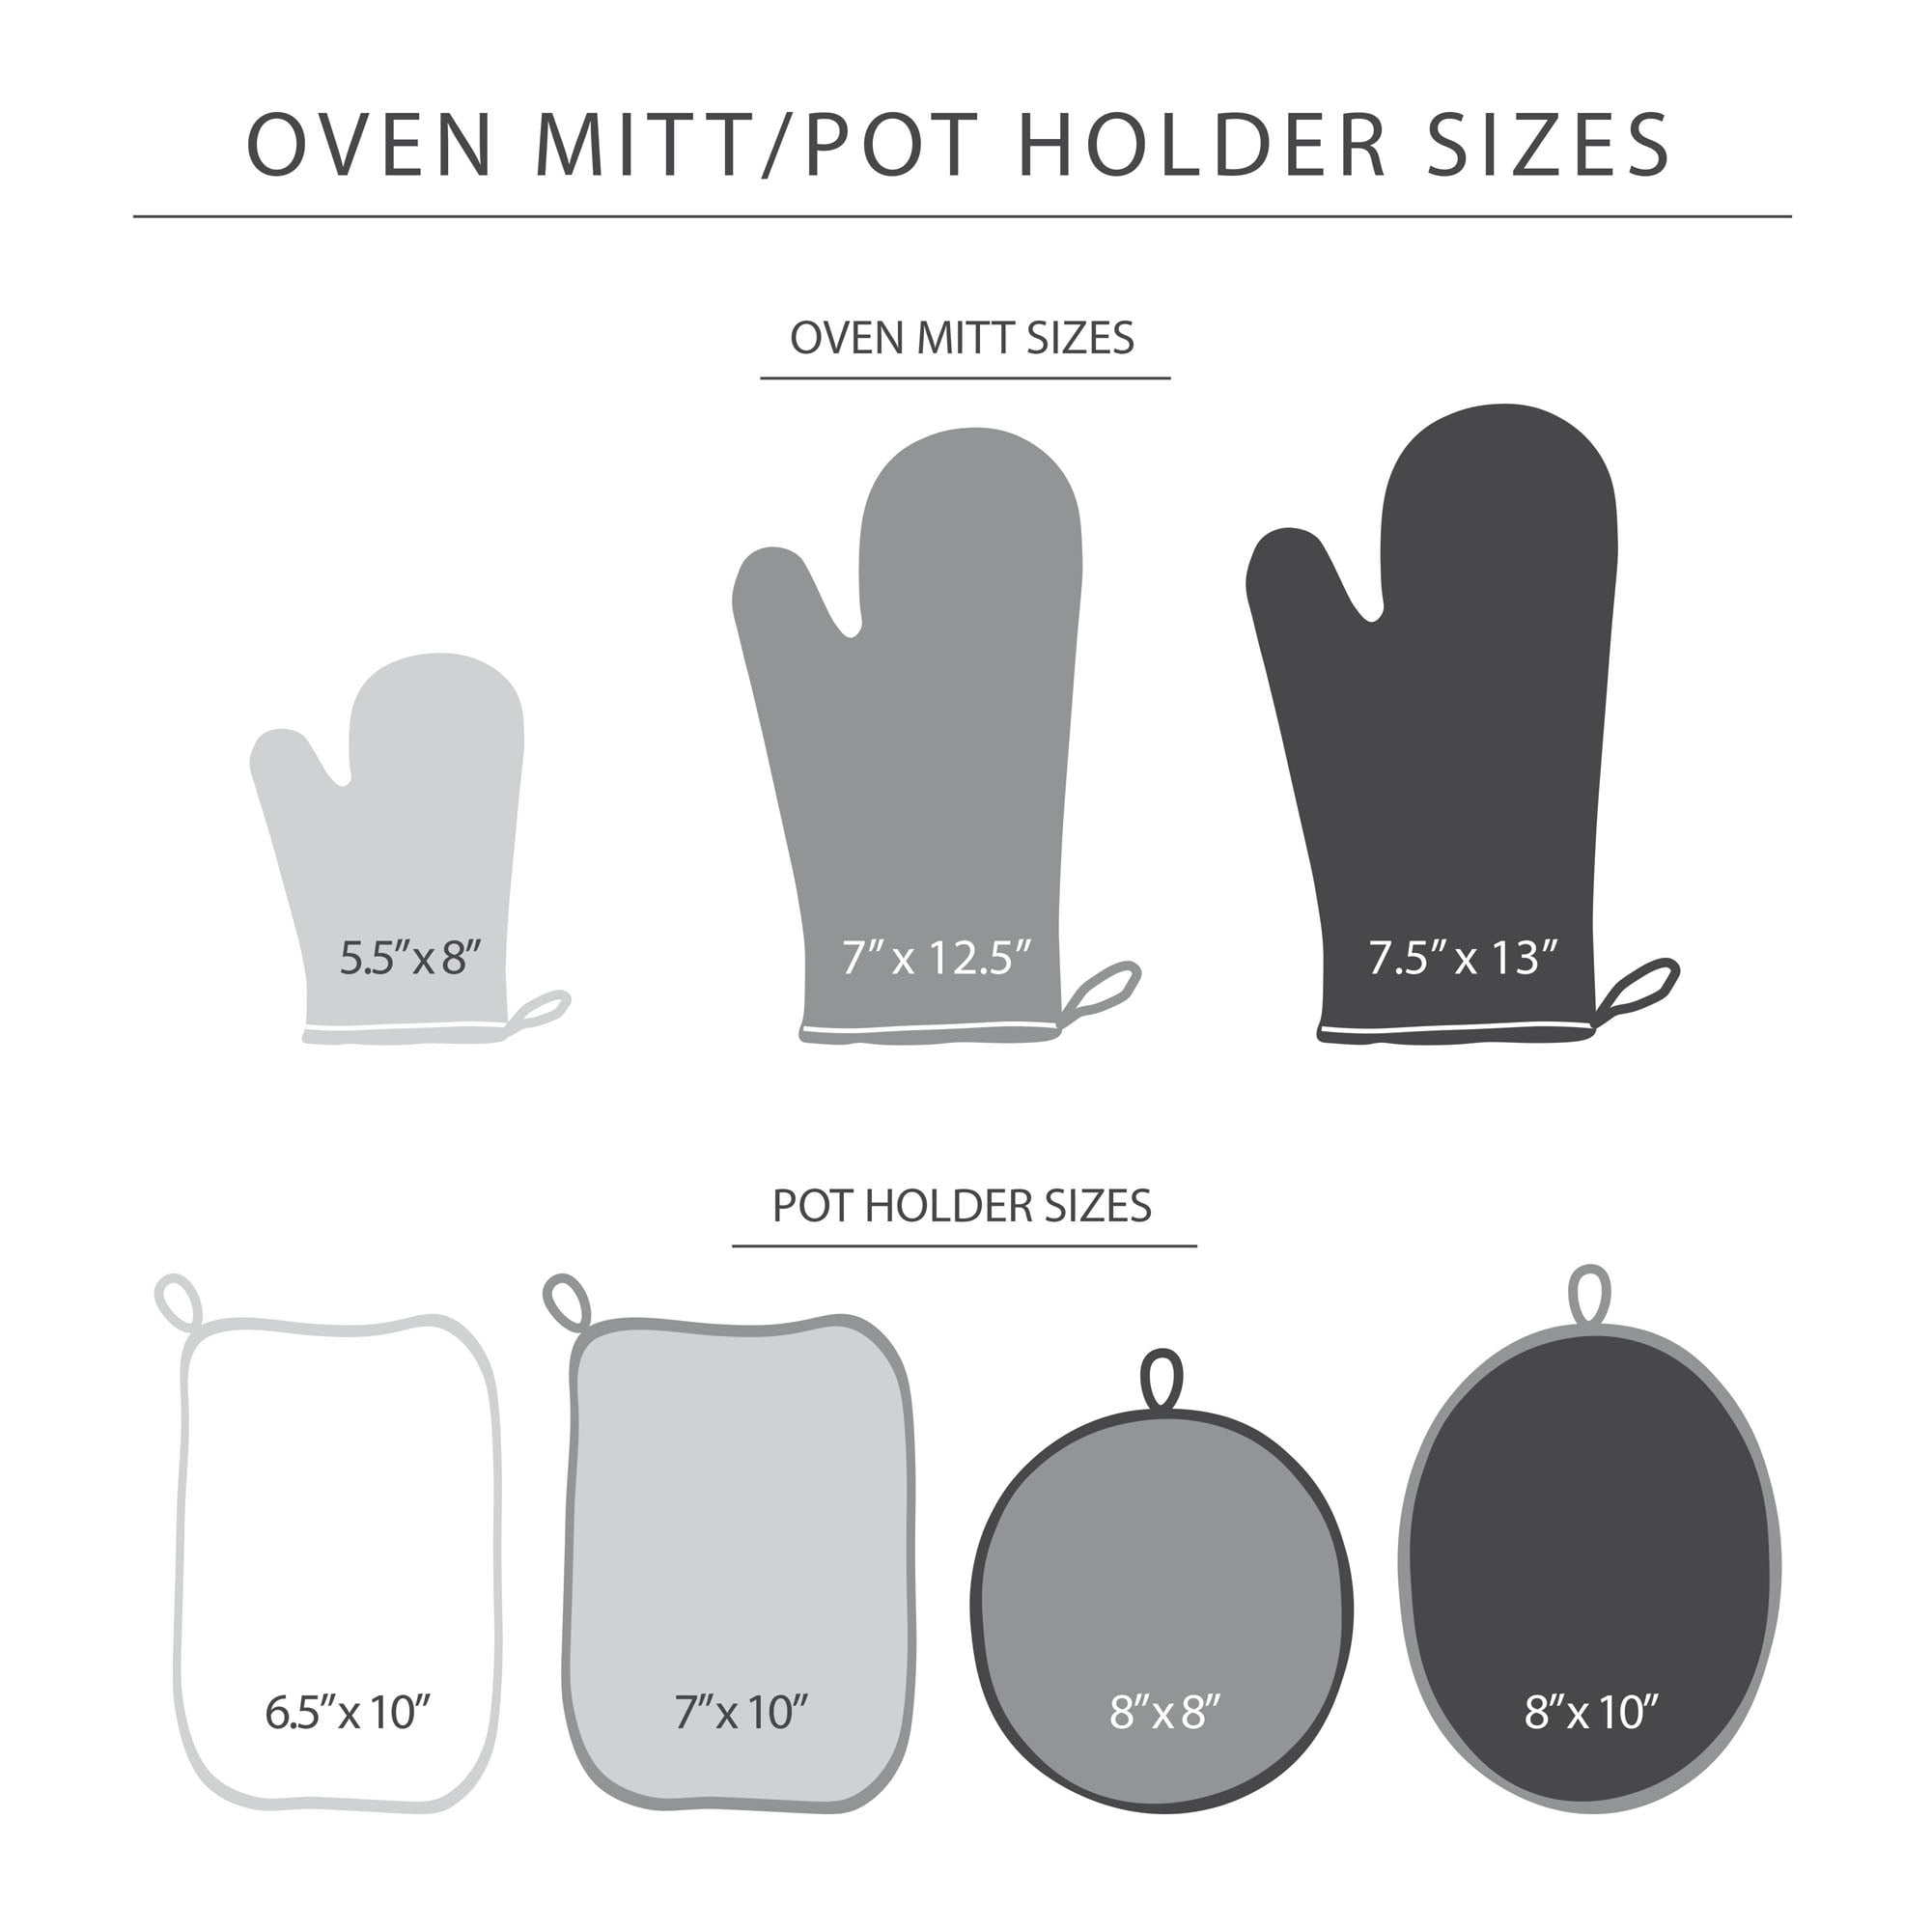 KitchenAid Asteroid Pot Holder 2-Pack Set, Charcoal Grey, 7x10